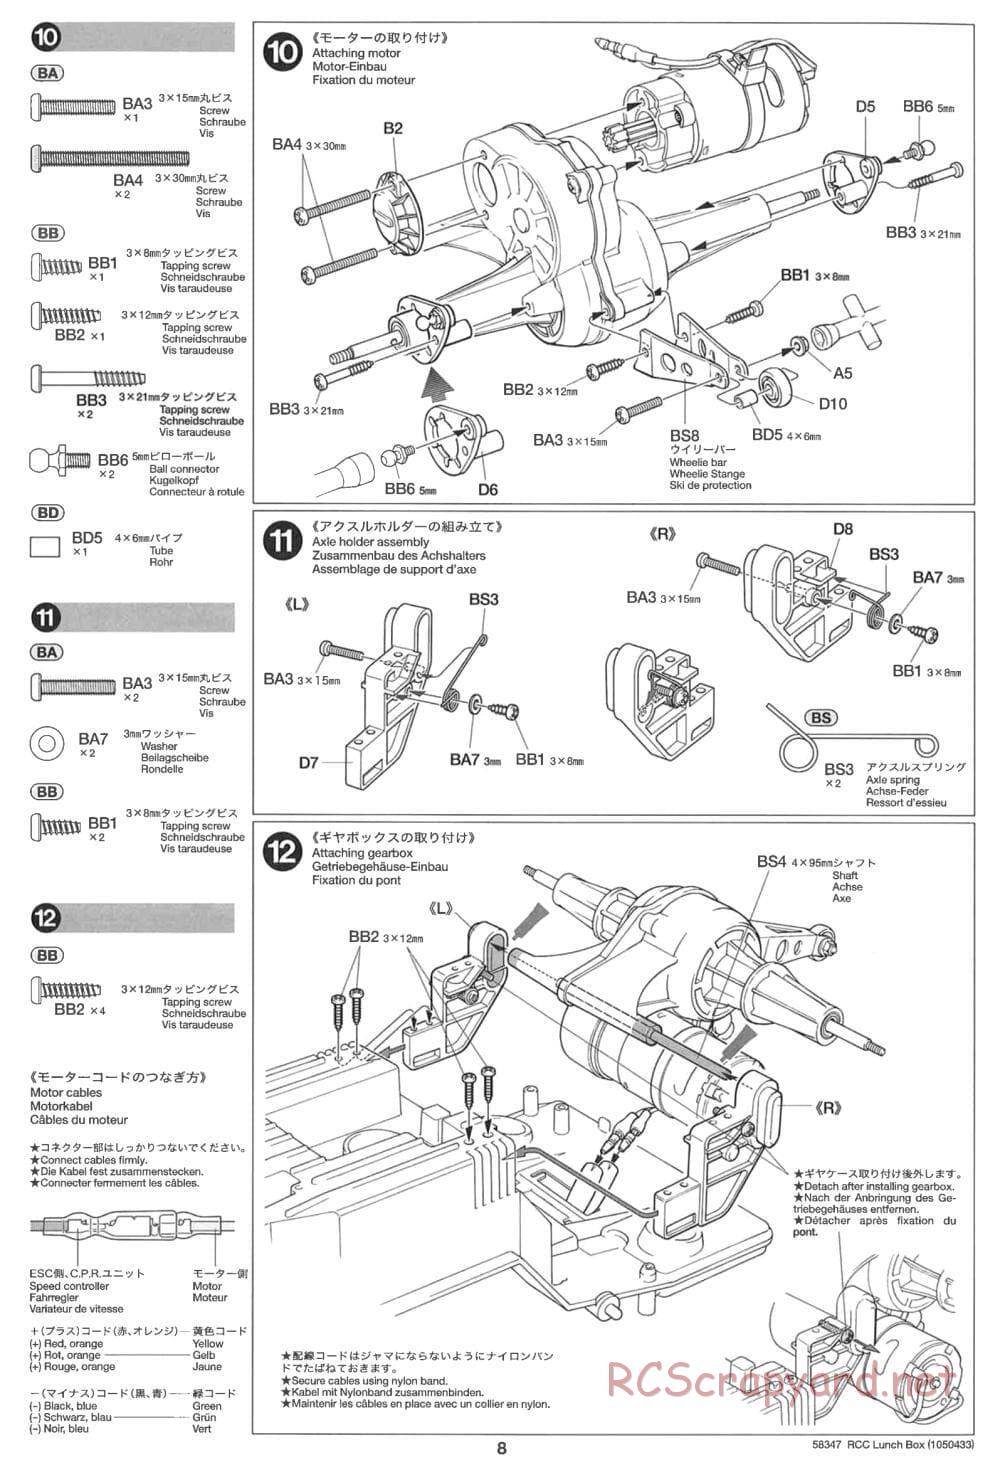 Tamiya - Vanessas Lunchbox - CW-01 Chassis - Manual - Page 8